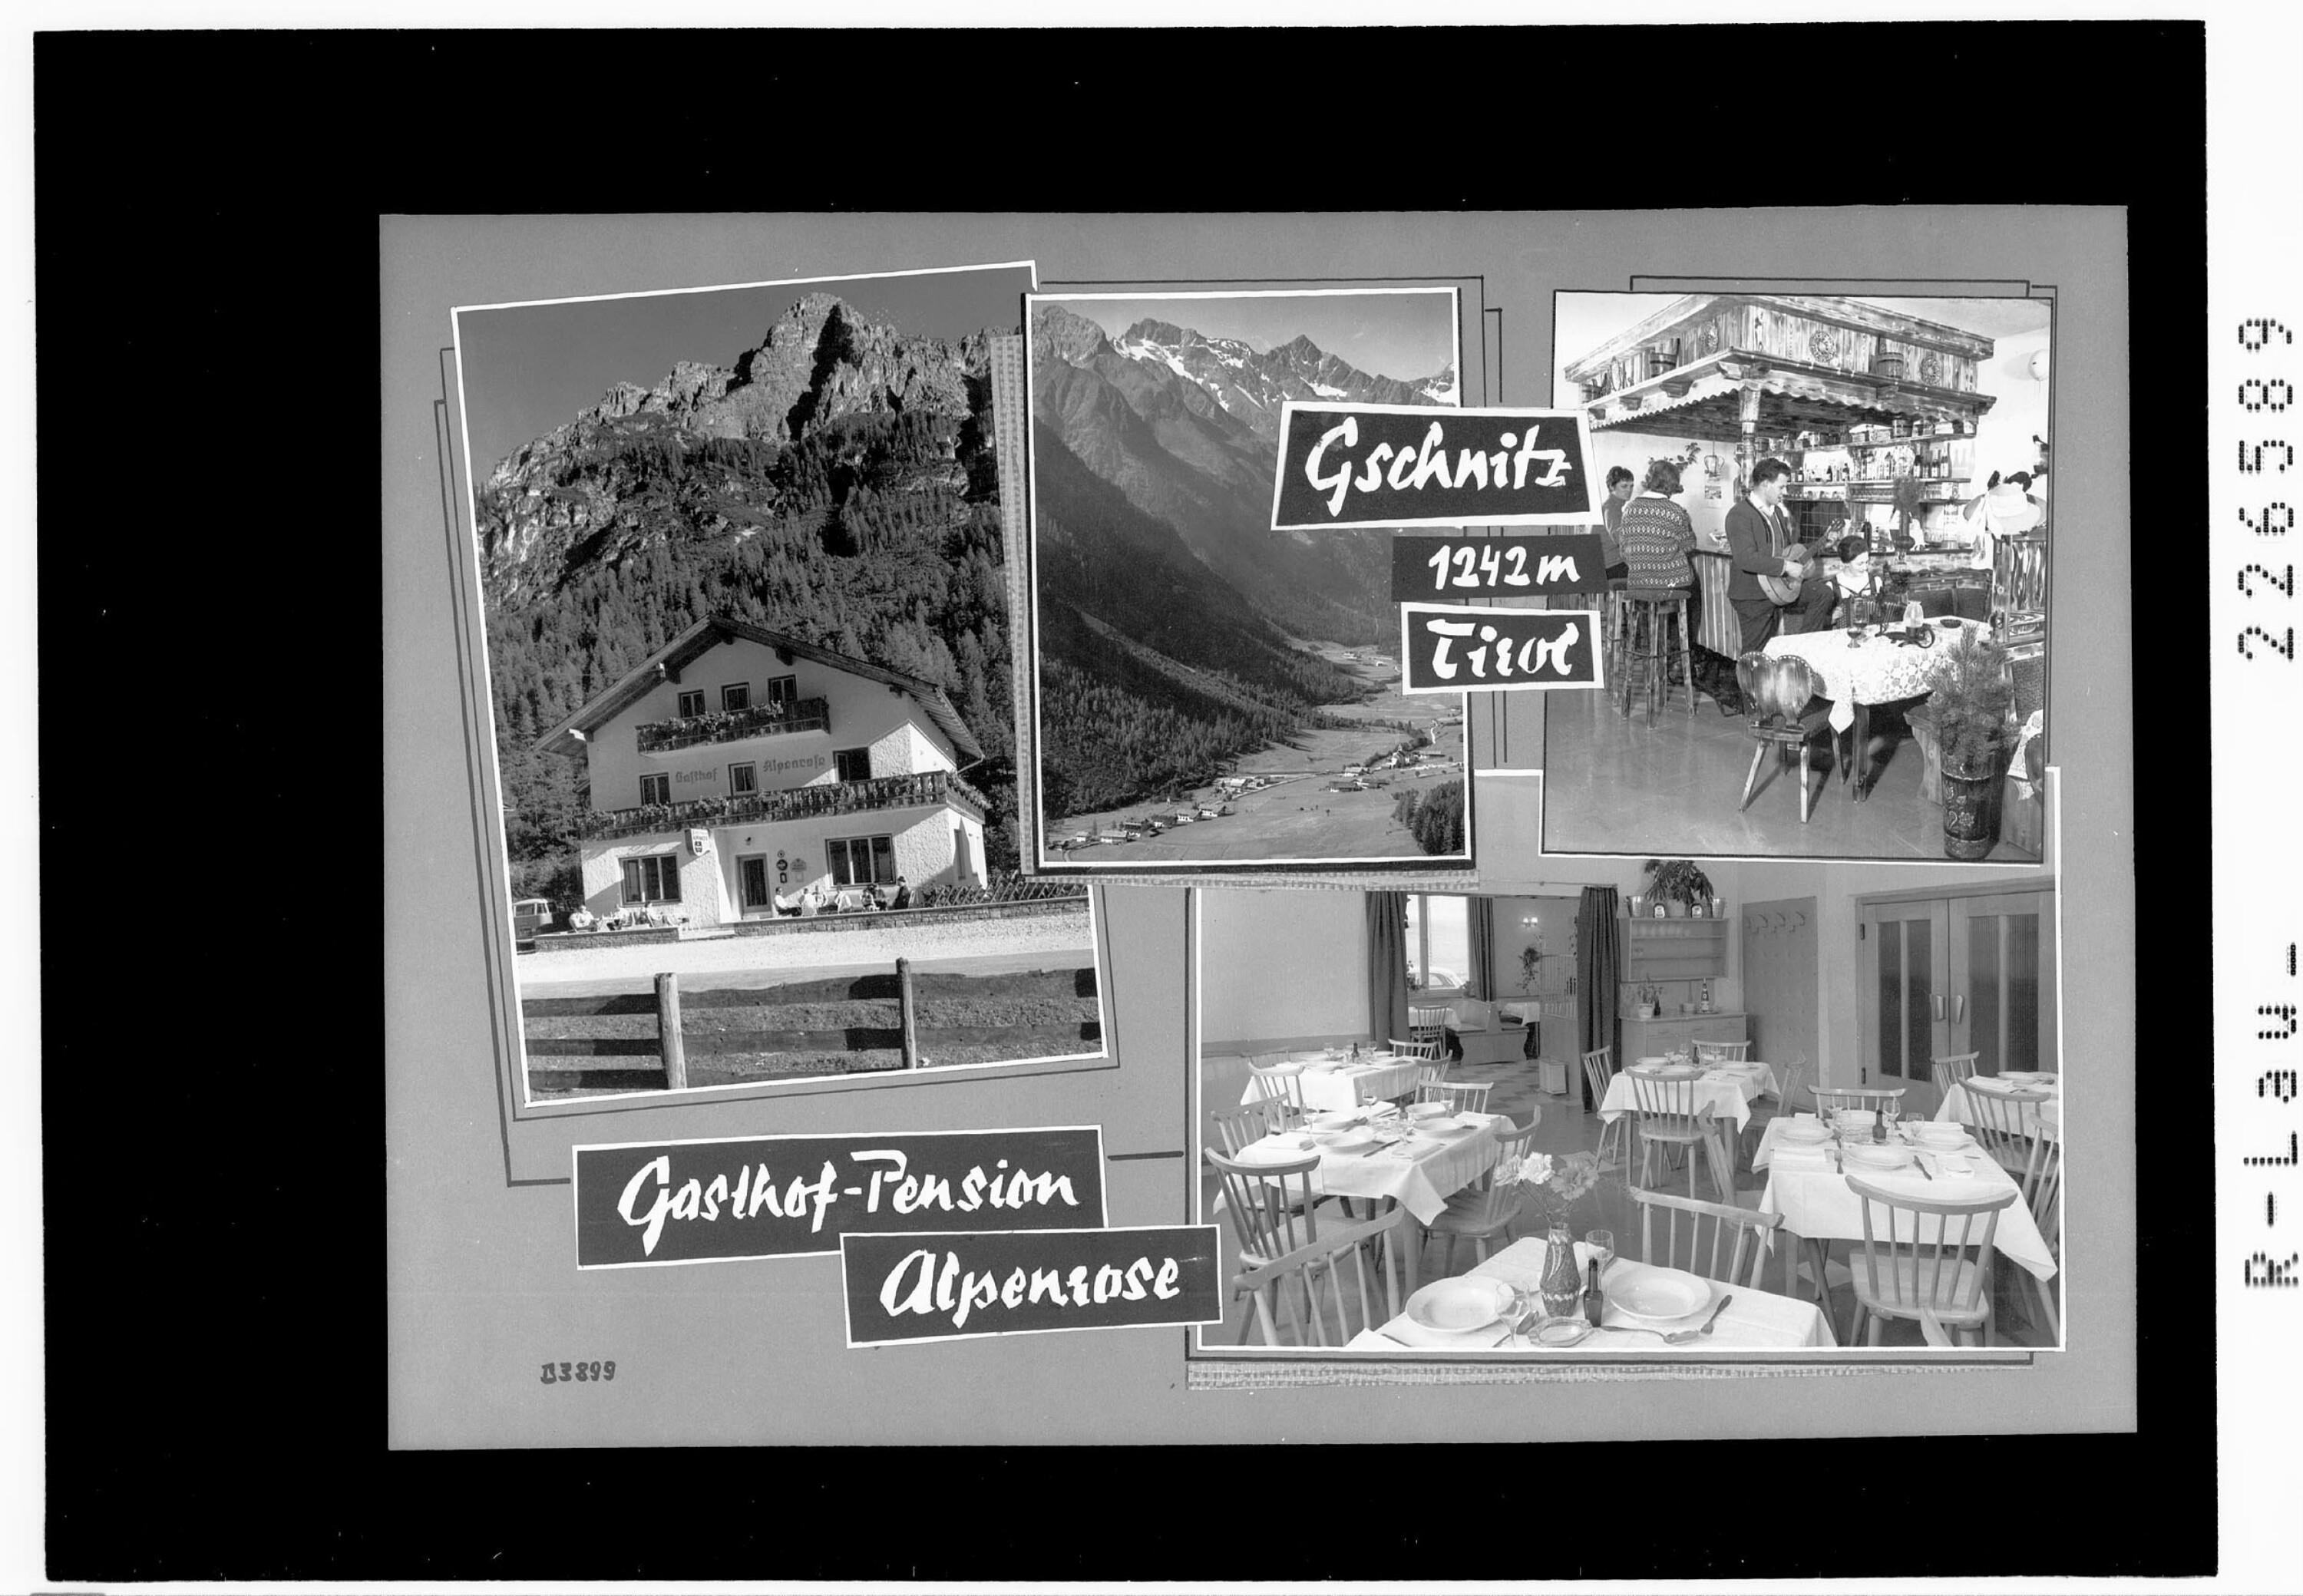 Gschnitz 1242 m in Tirol / Gasthof Pension Alpenrose></div>


    <hr>
    <div class=